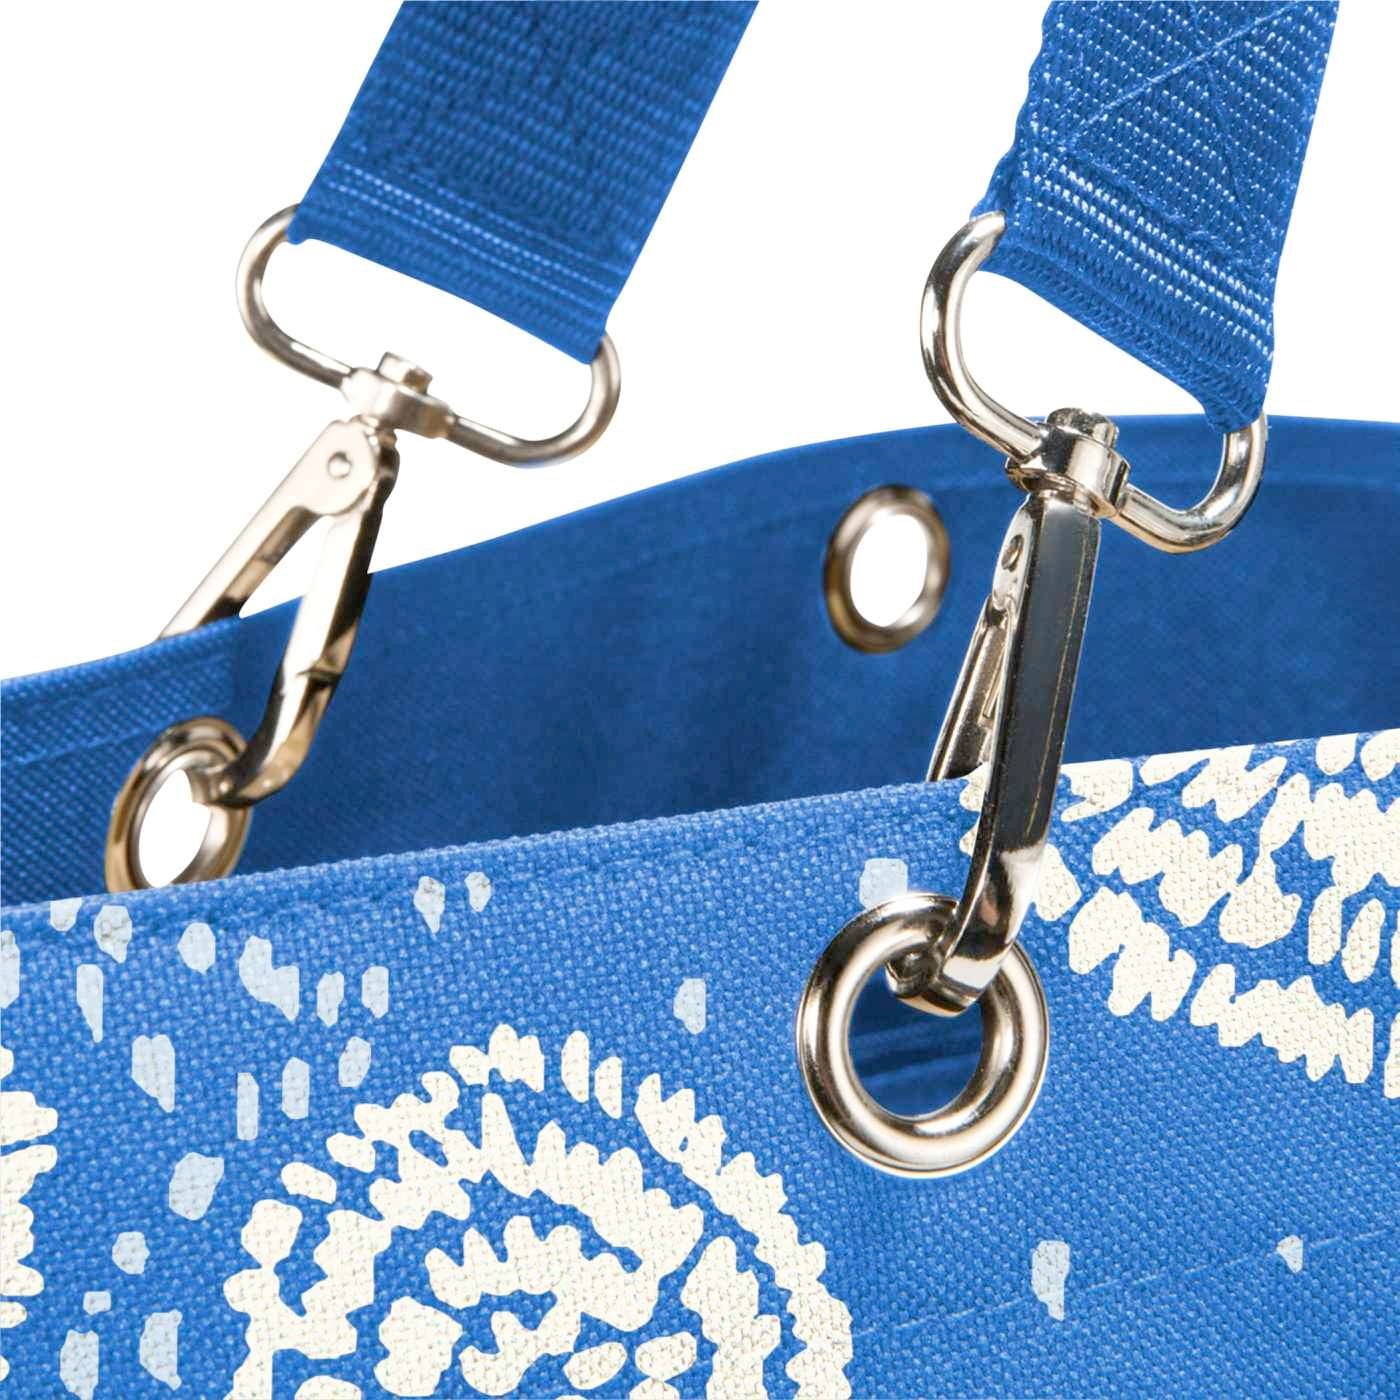 Taška přes rameno Shopper XL batik strong blue_1